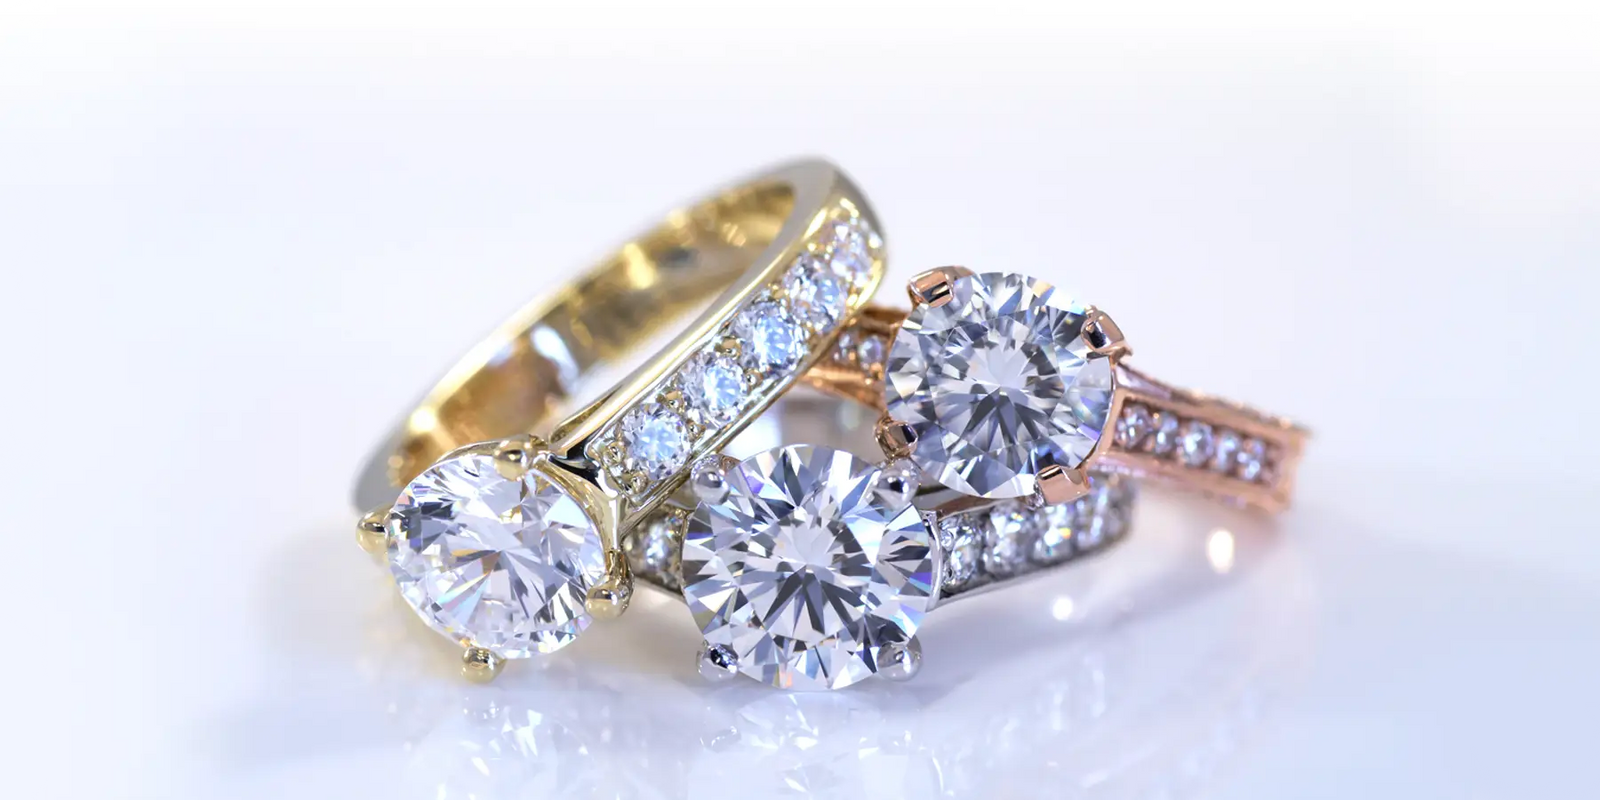 solid gold and platinum metals used in Quorri engagement rings